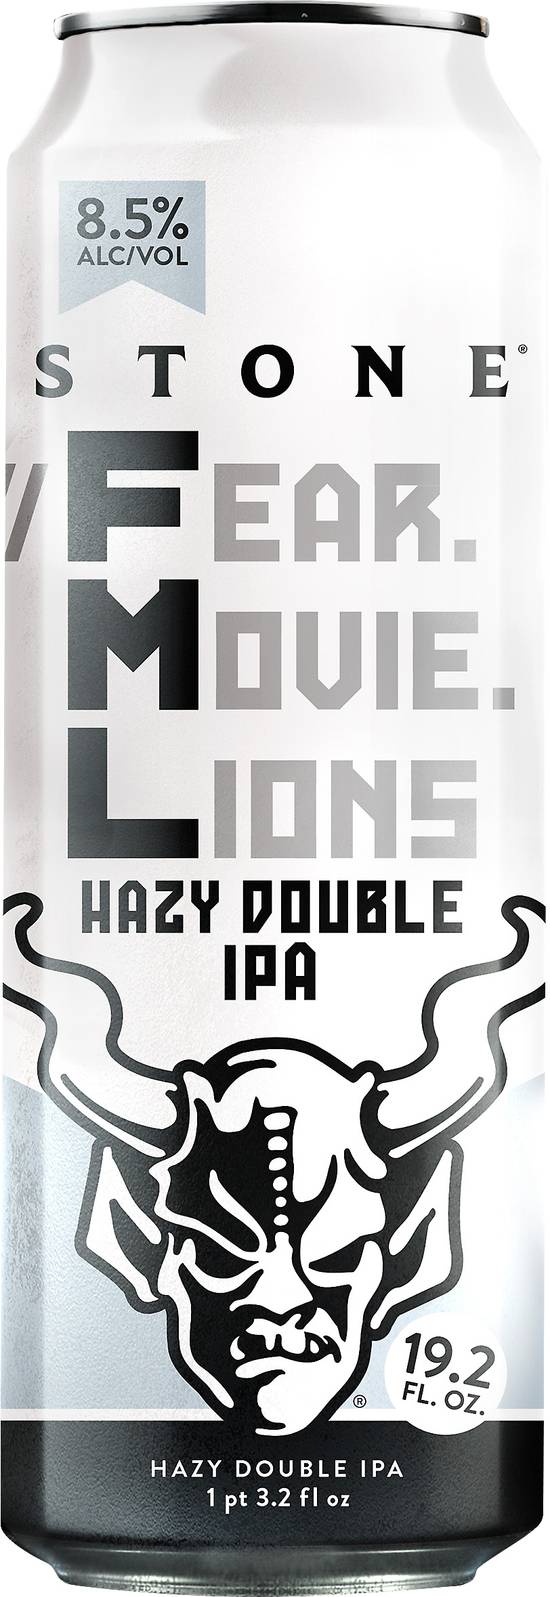 Stone Fear Movie Lions Domestic Hazy Double Ipa Beer (19.2 fl oz)